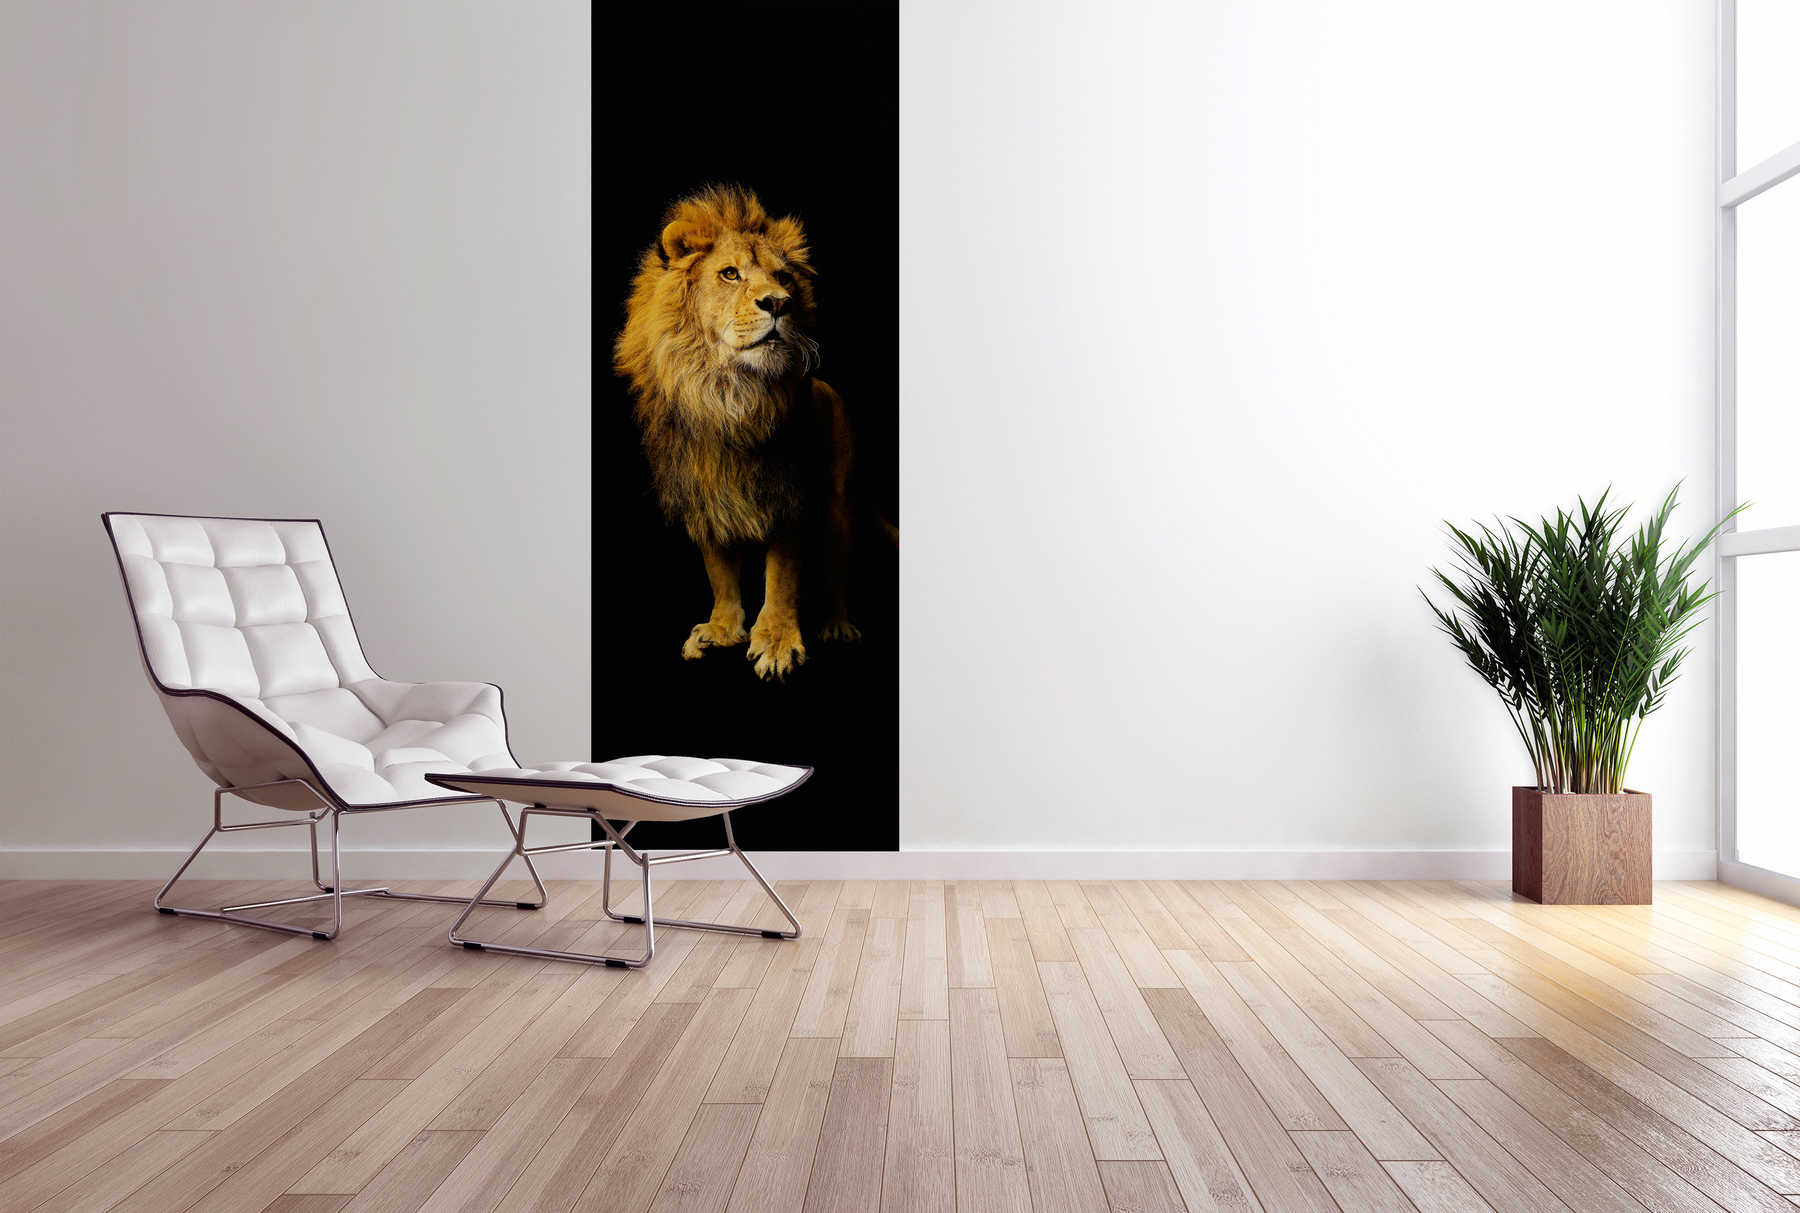             Animal mural lion motif on premium smooth fleece
        